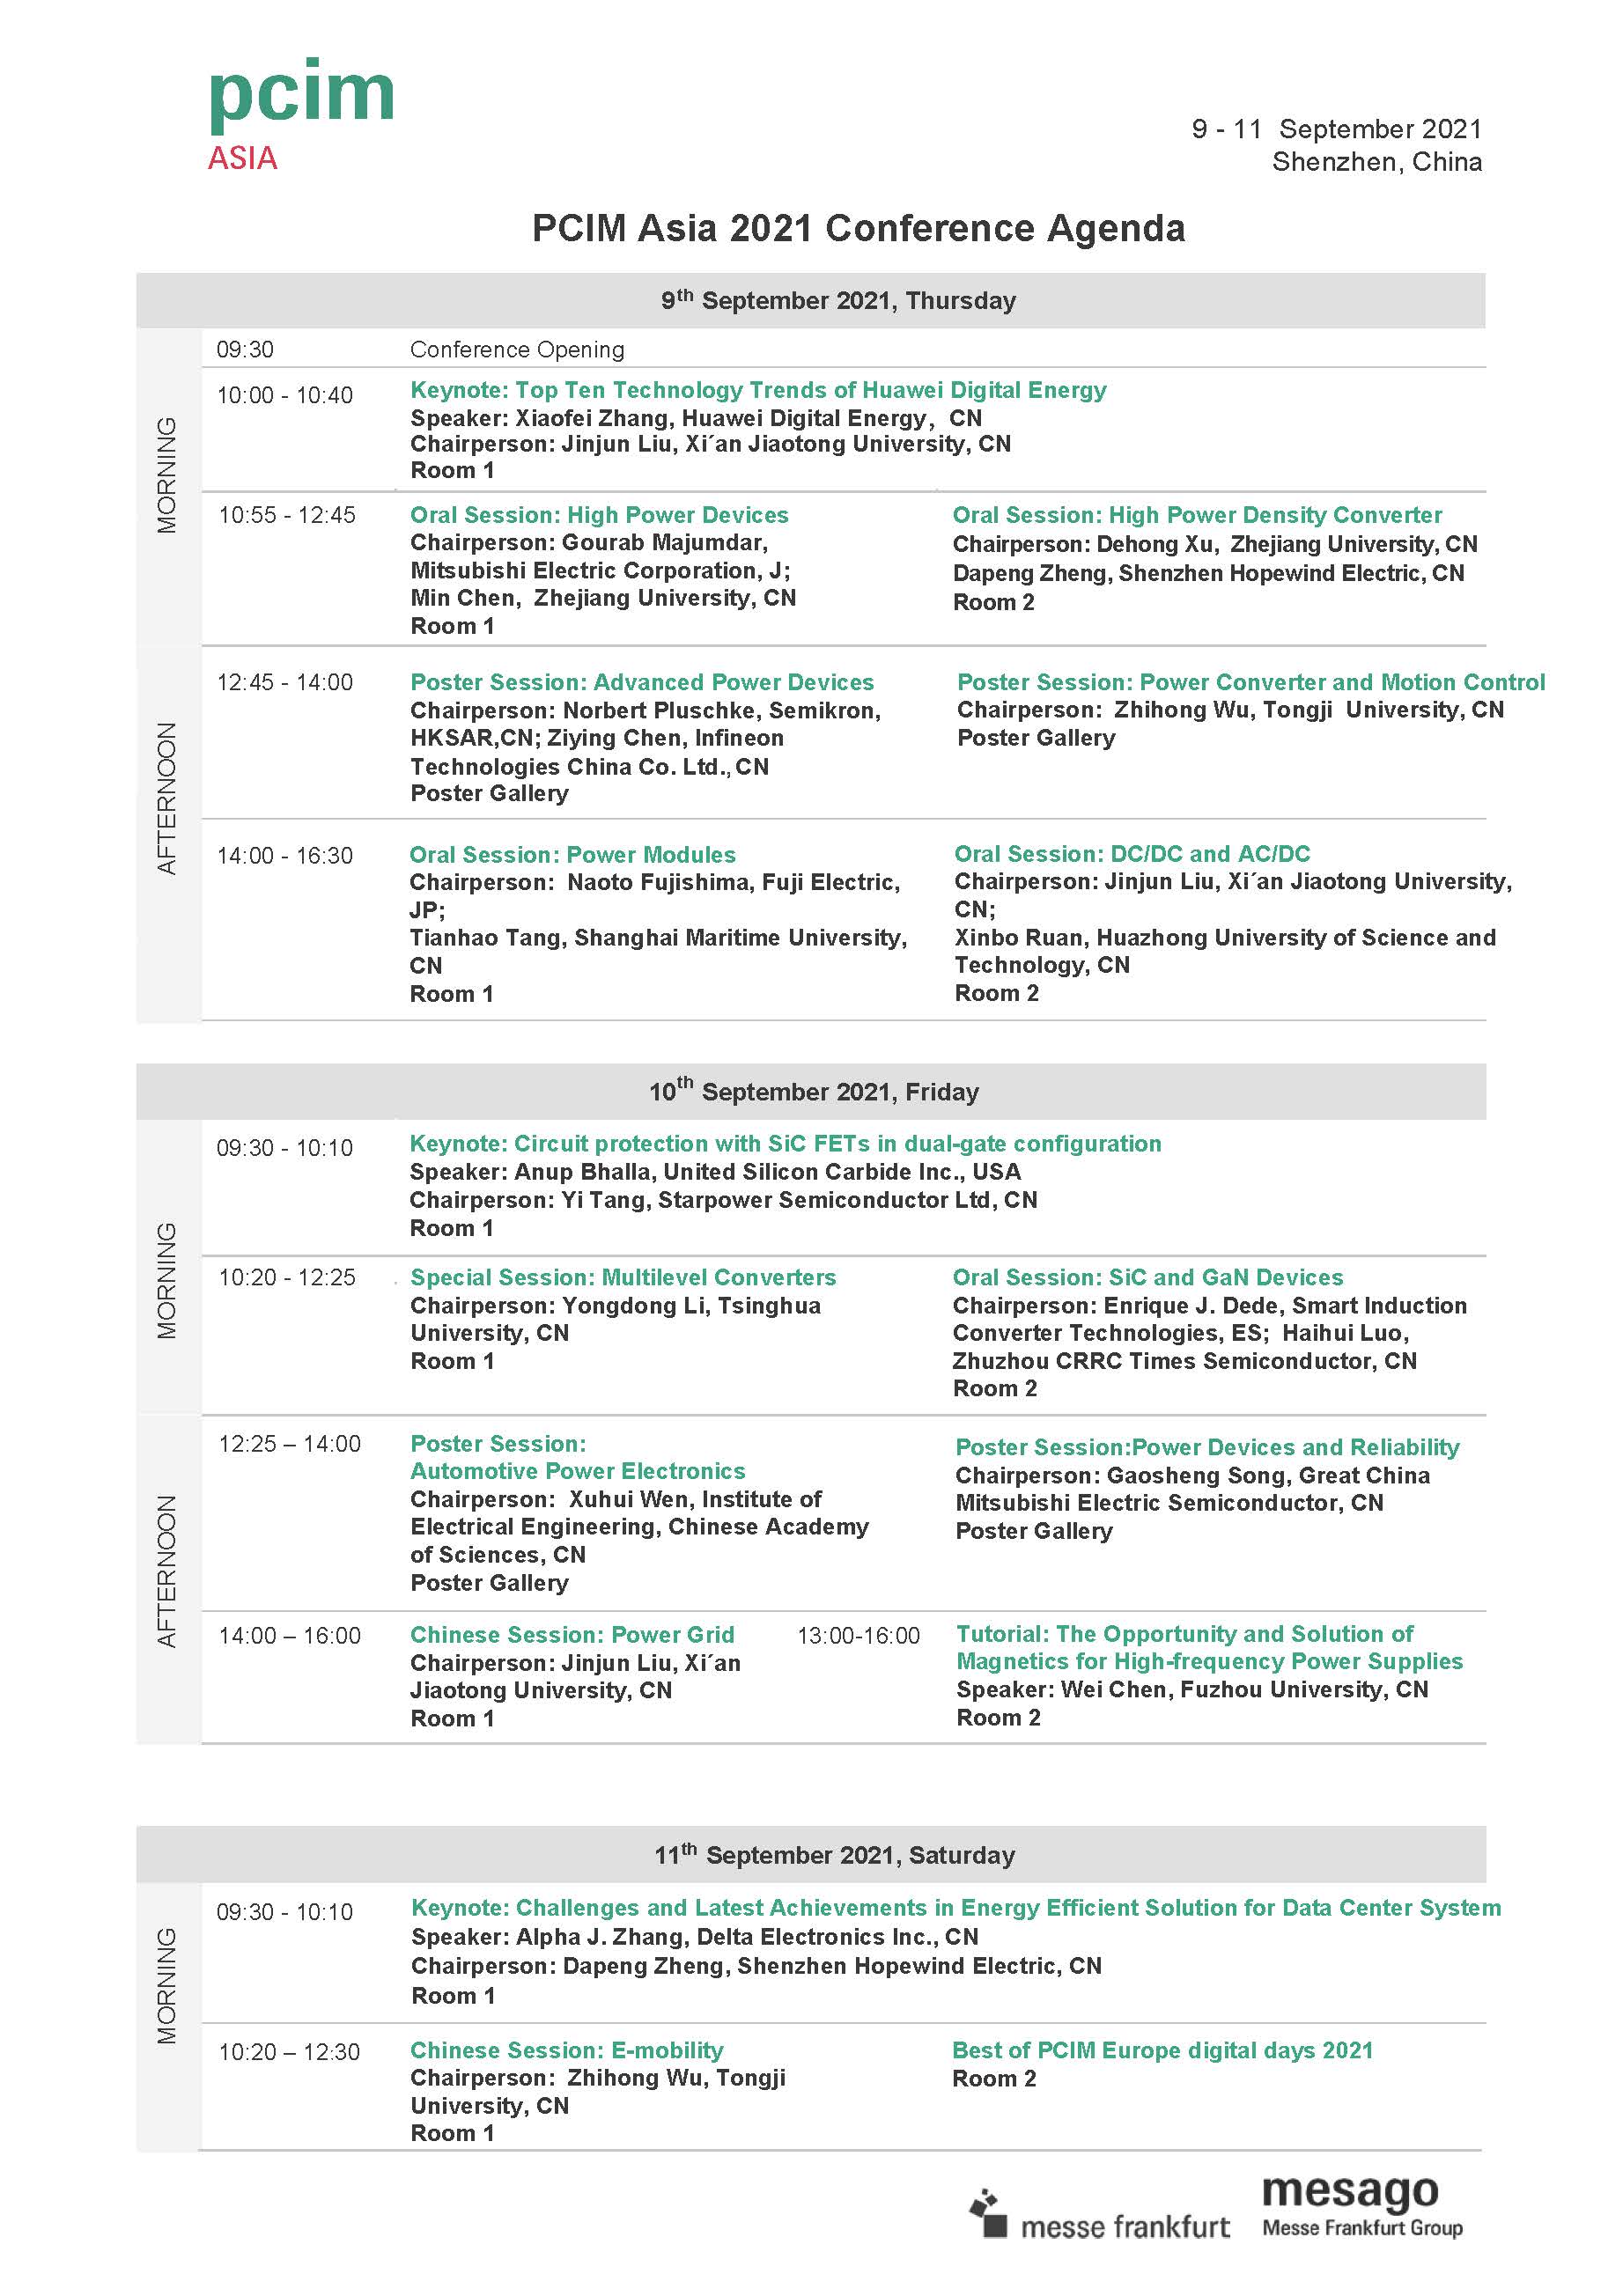 PCIM Asia 2021 Conference Agenda +NB